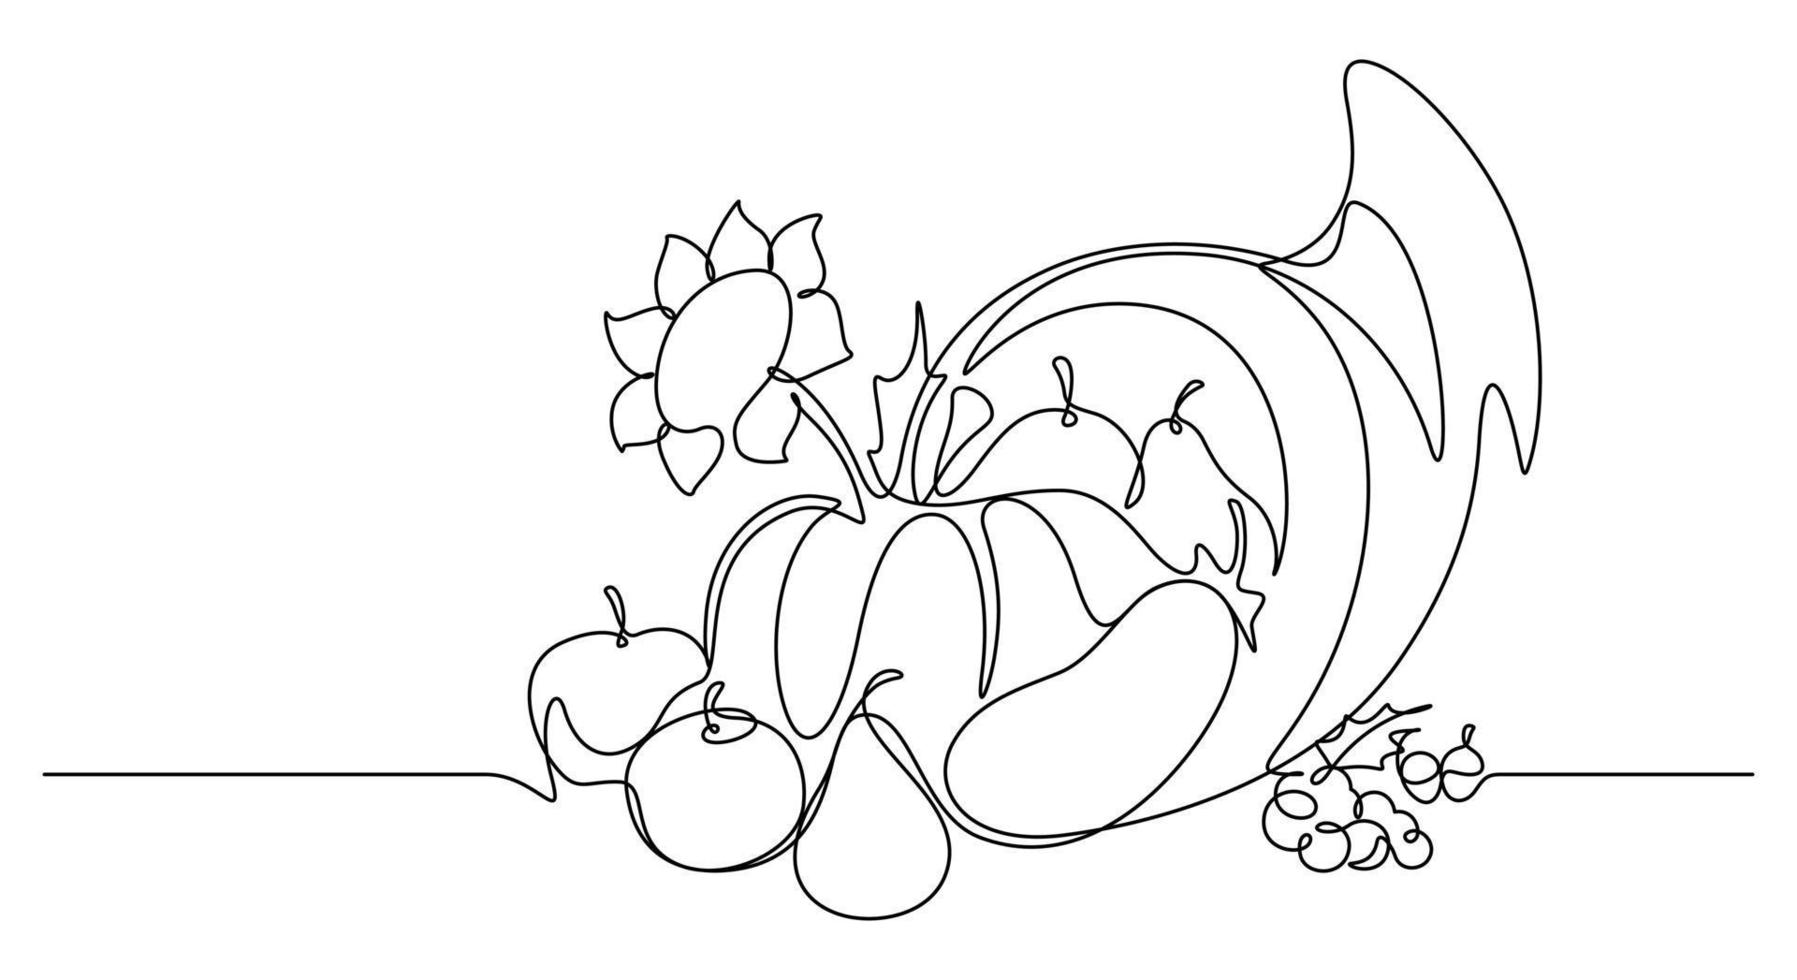 kontinuerlig linje ritning stil av ymnighetshorn vektor illustration.thanksgiving day